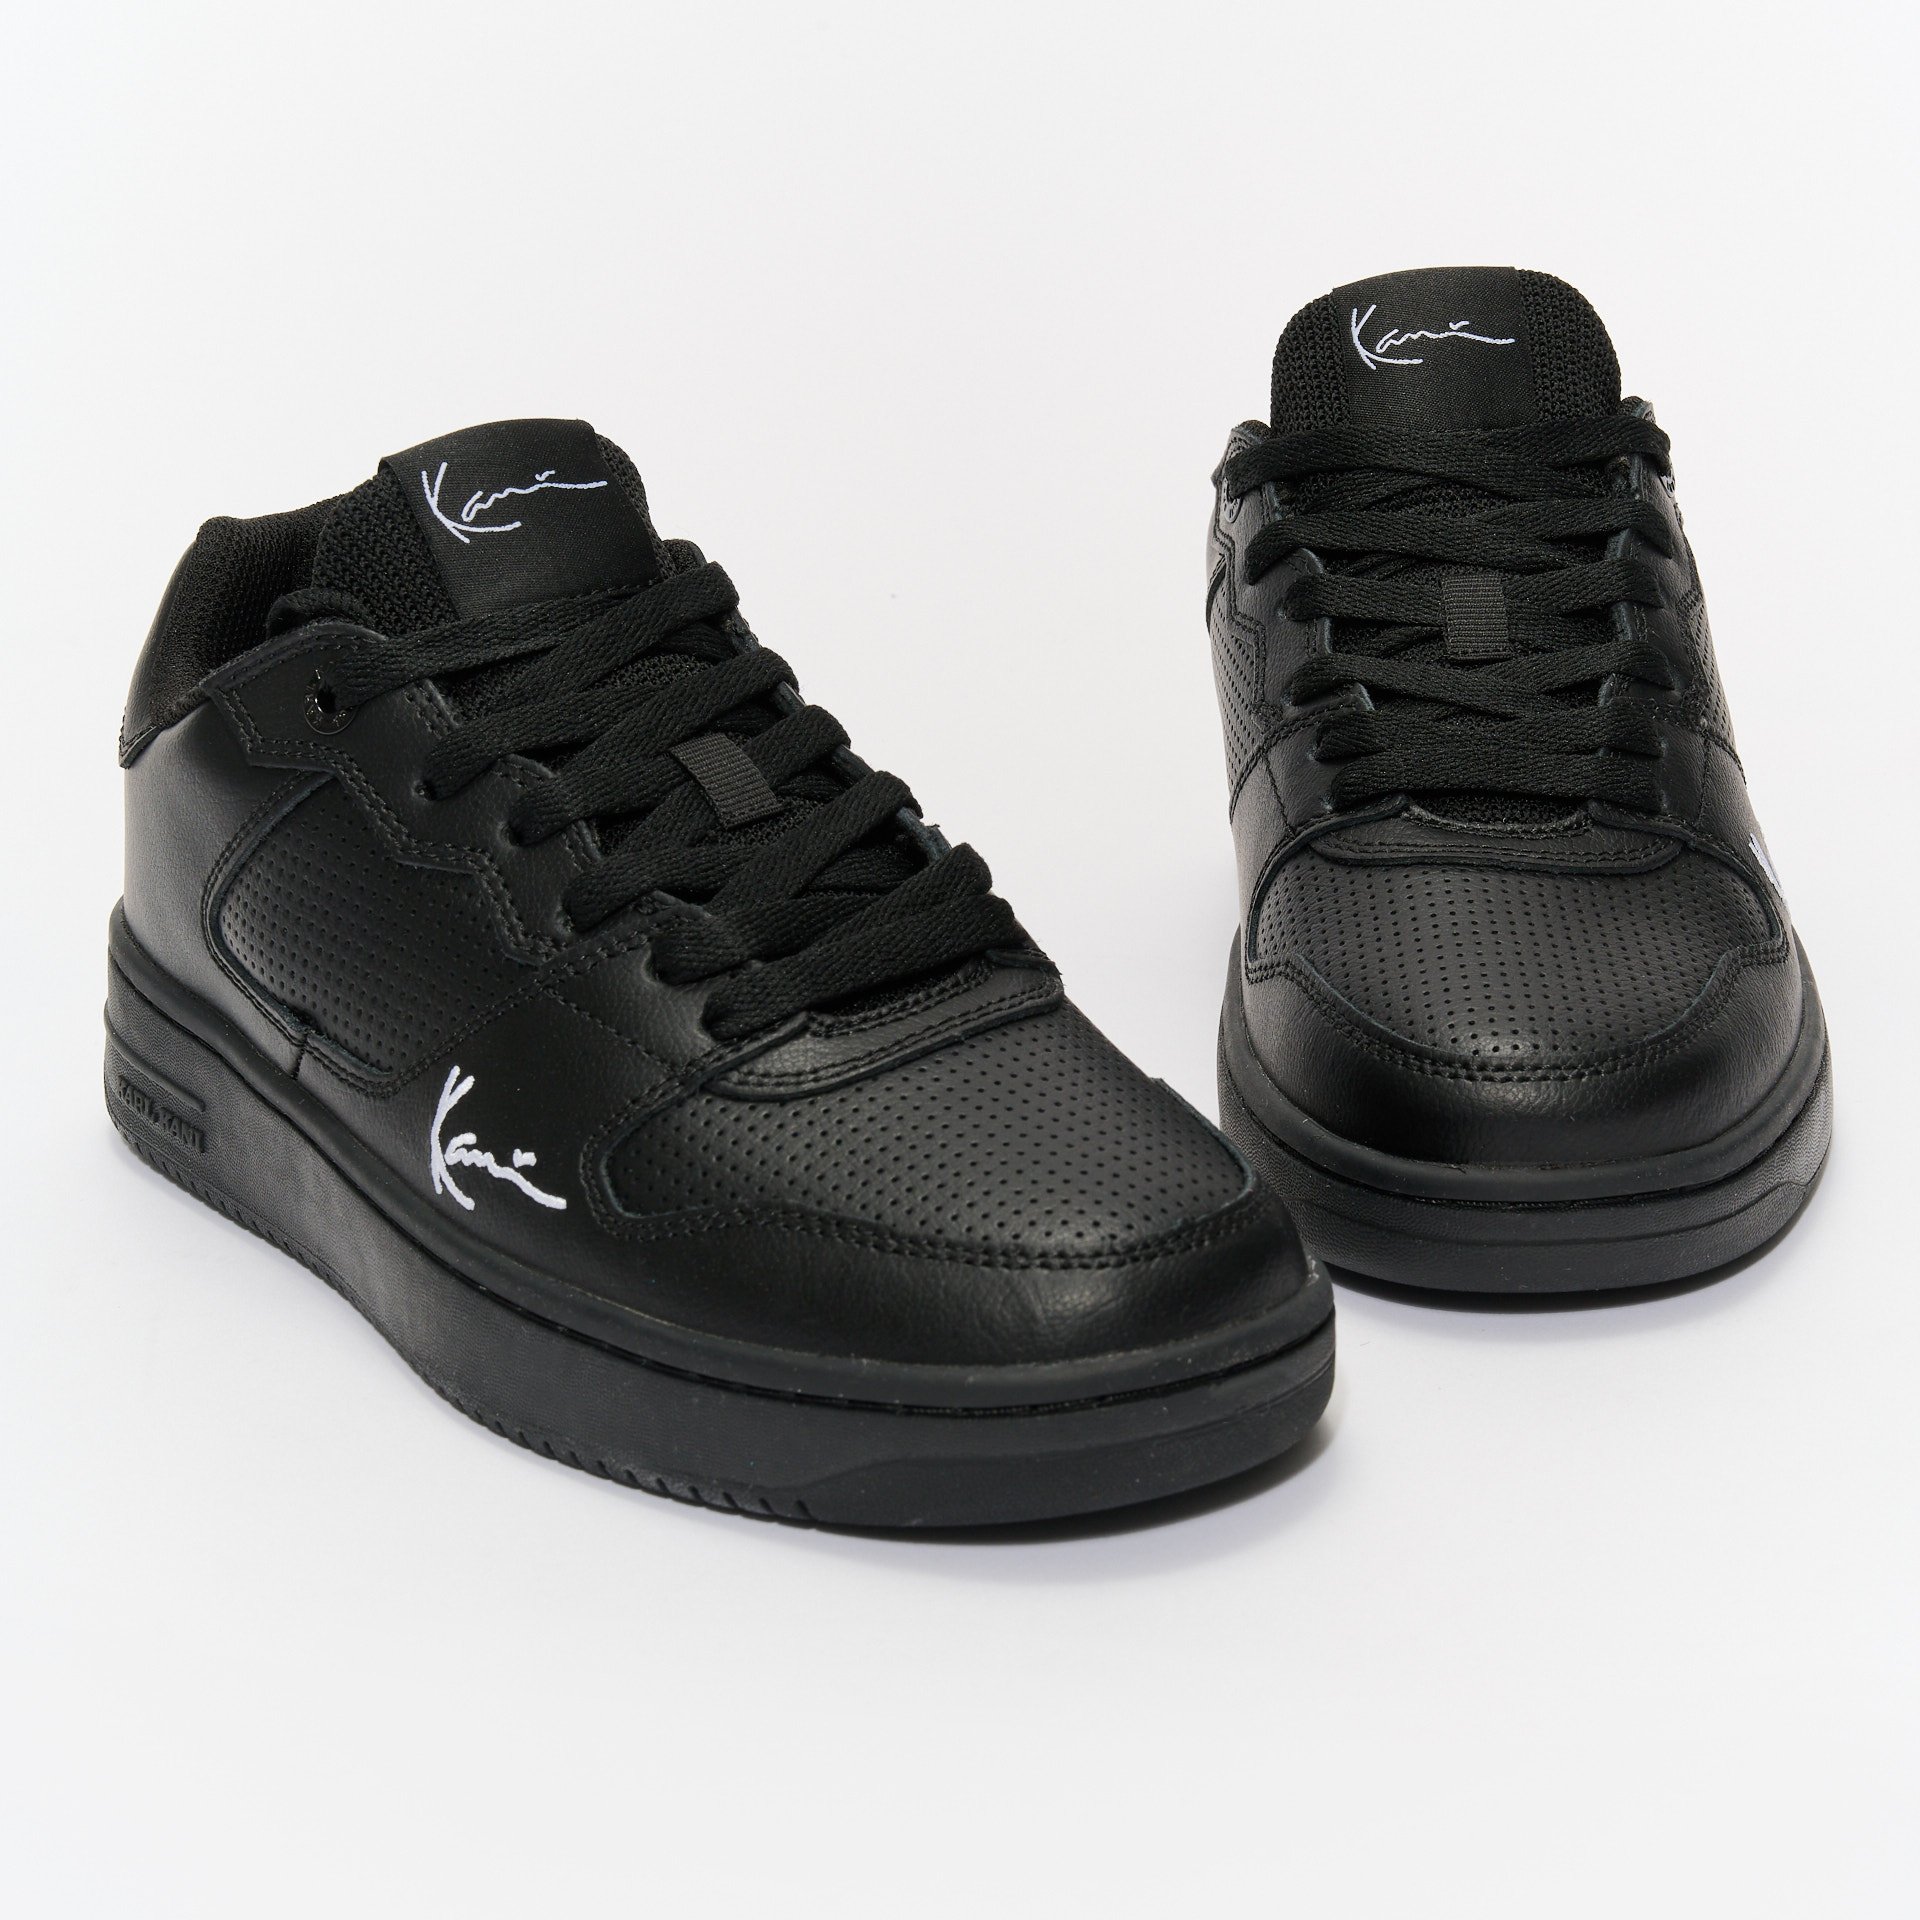 Karl Kani 89 Classic Sneaker Black/White